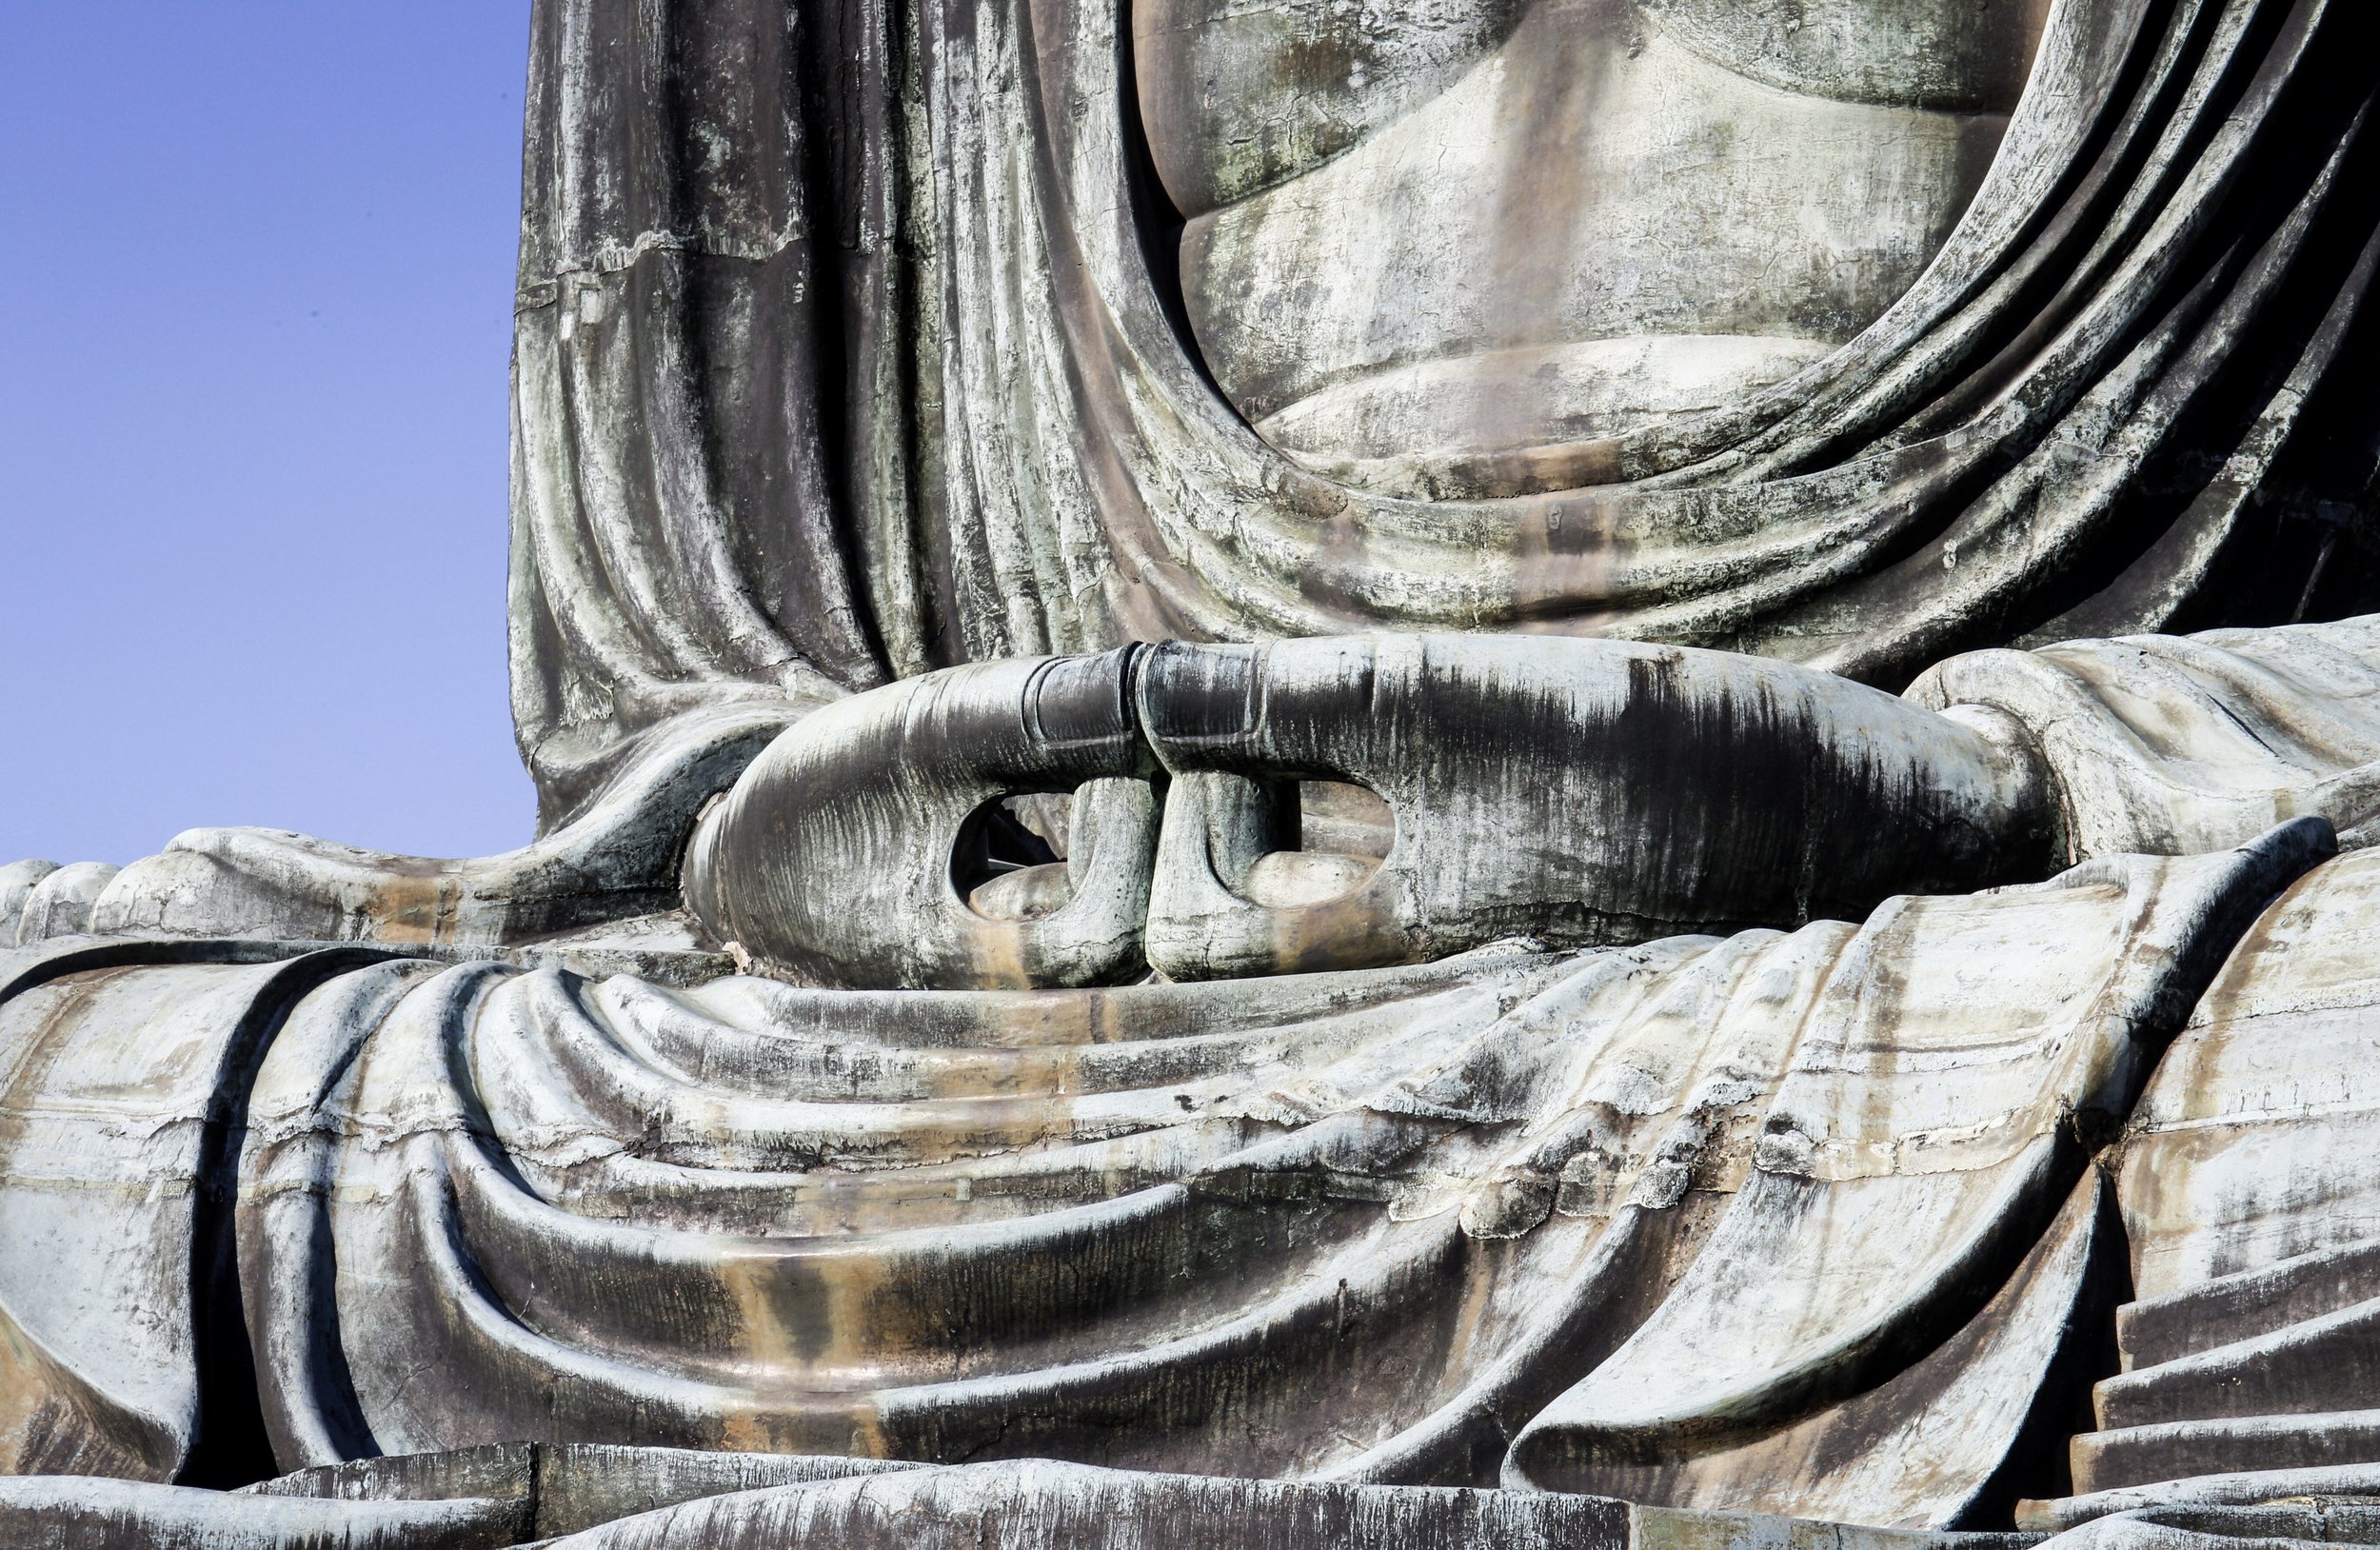 Giant Buddha, Kamakura, Japan